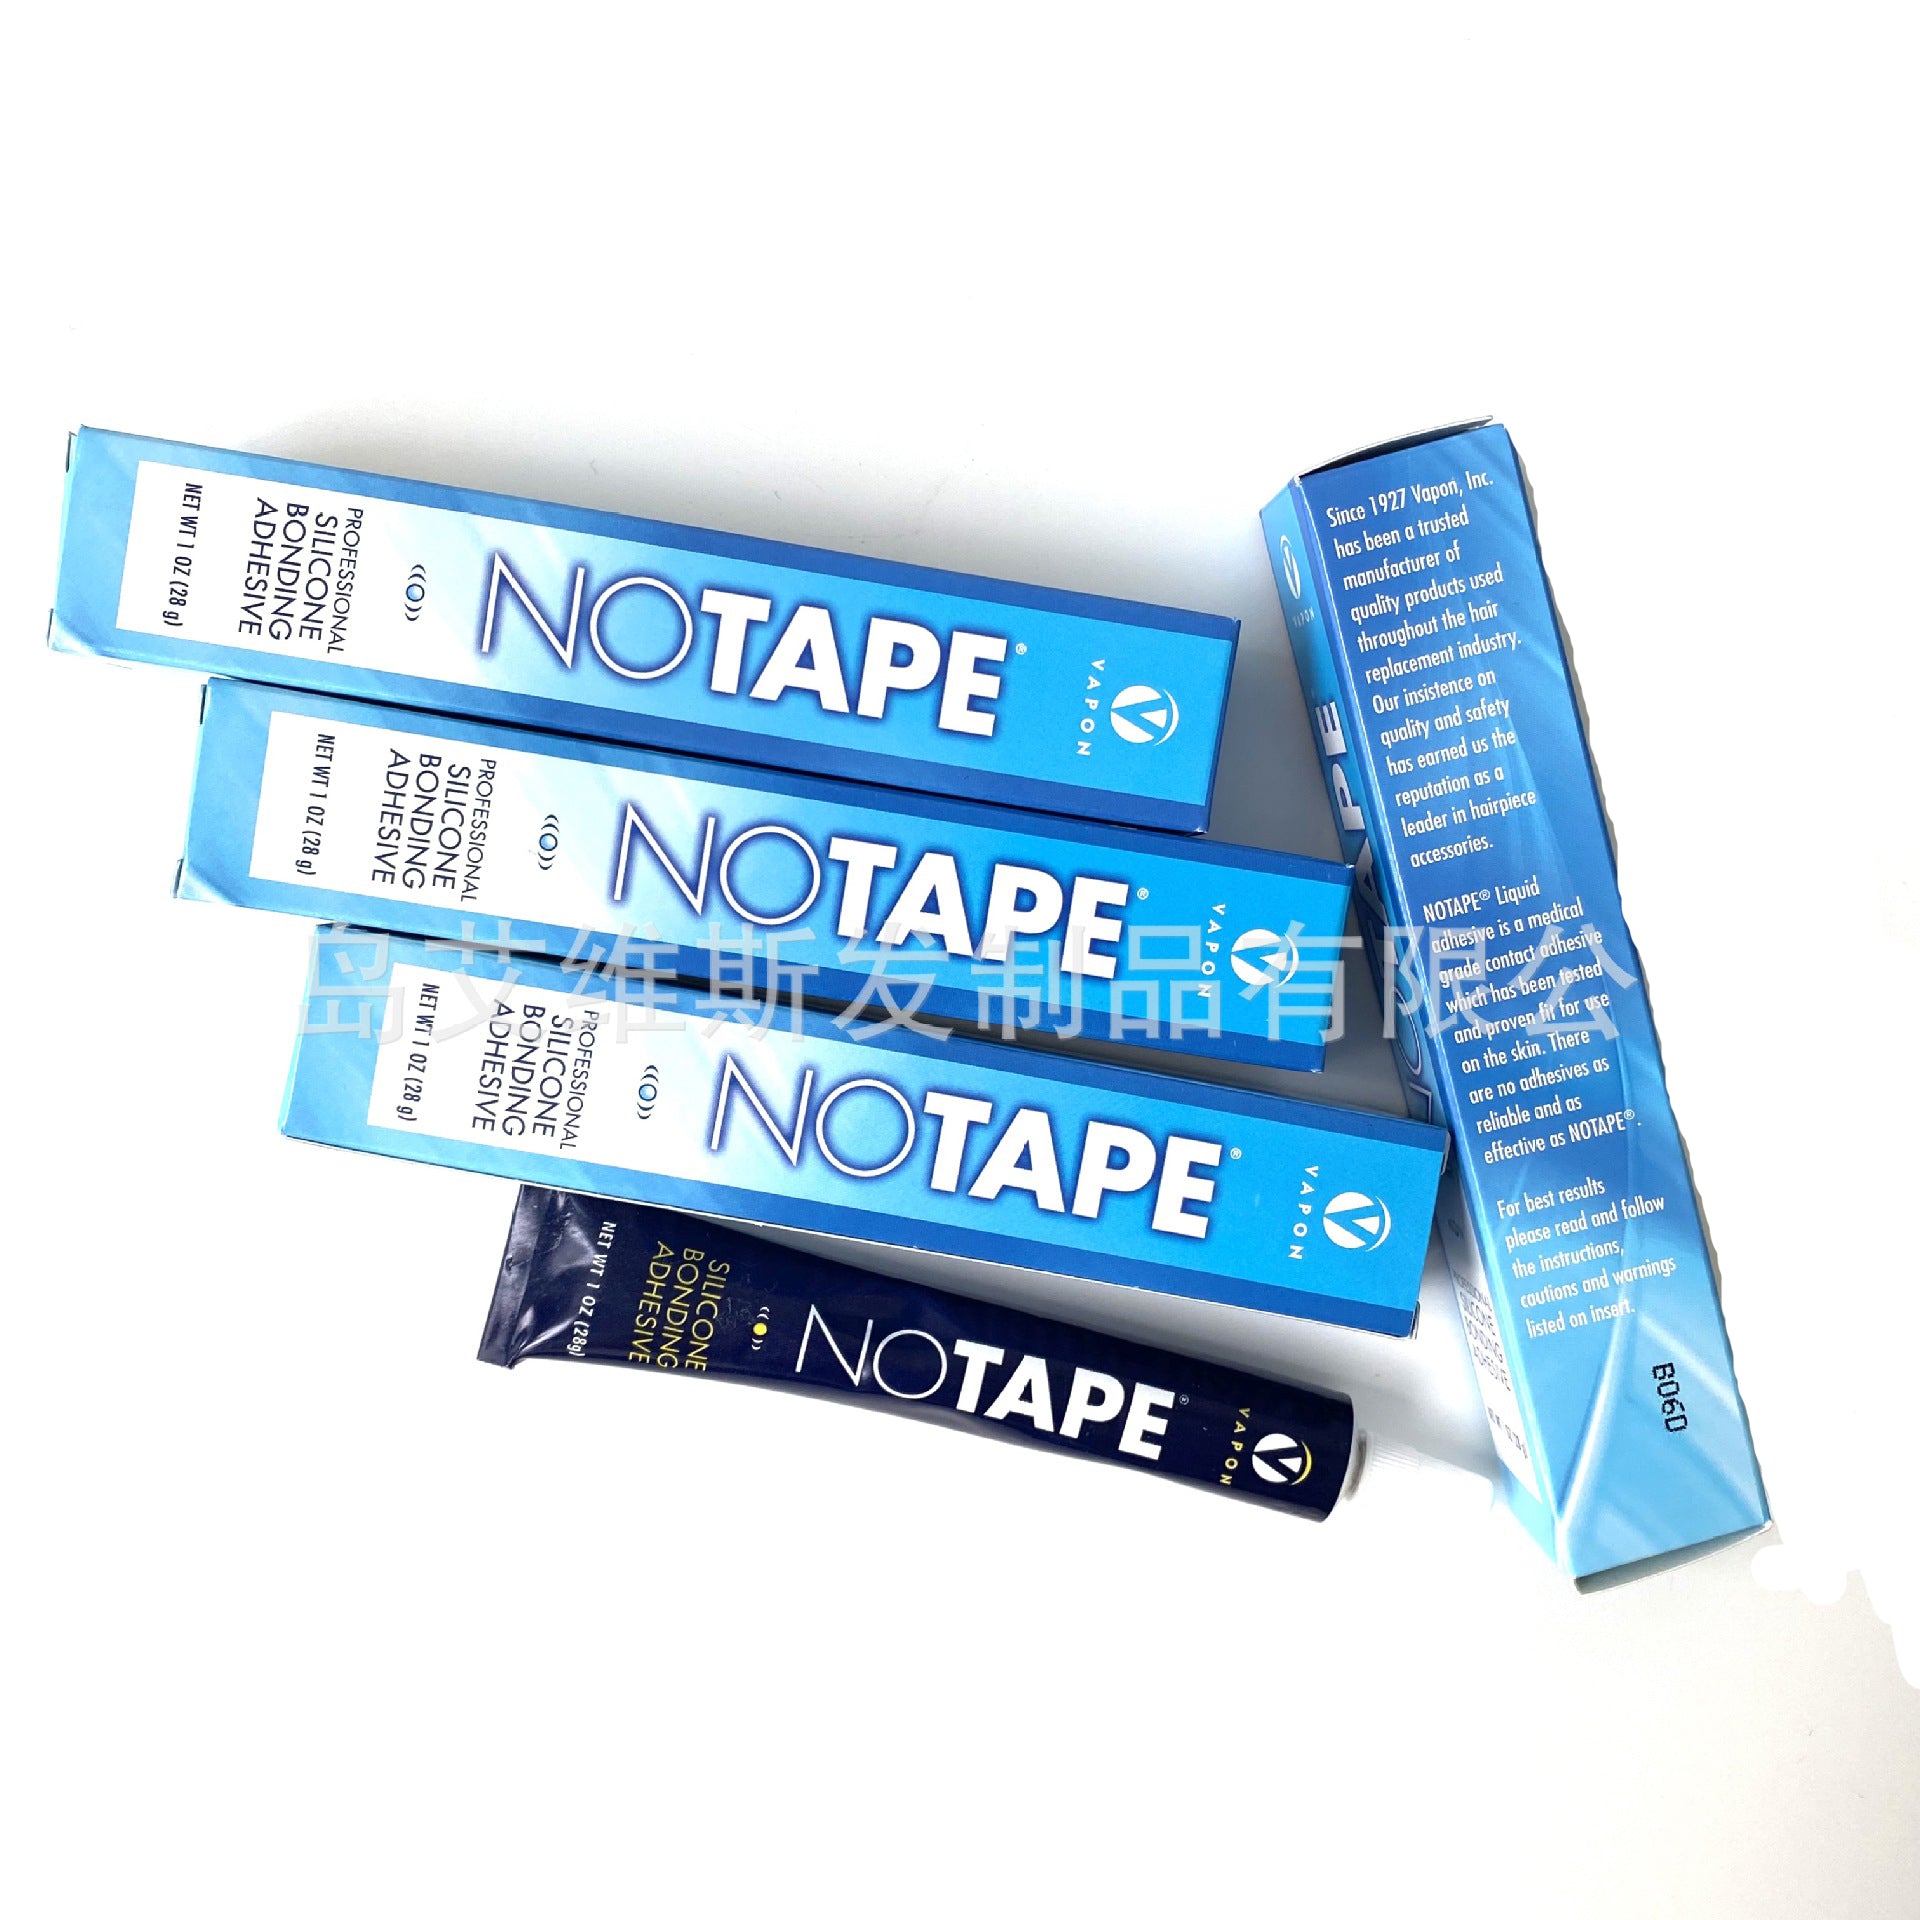 No-Tape Silicone Bonding Adhesive